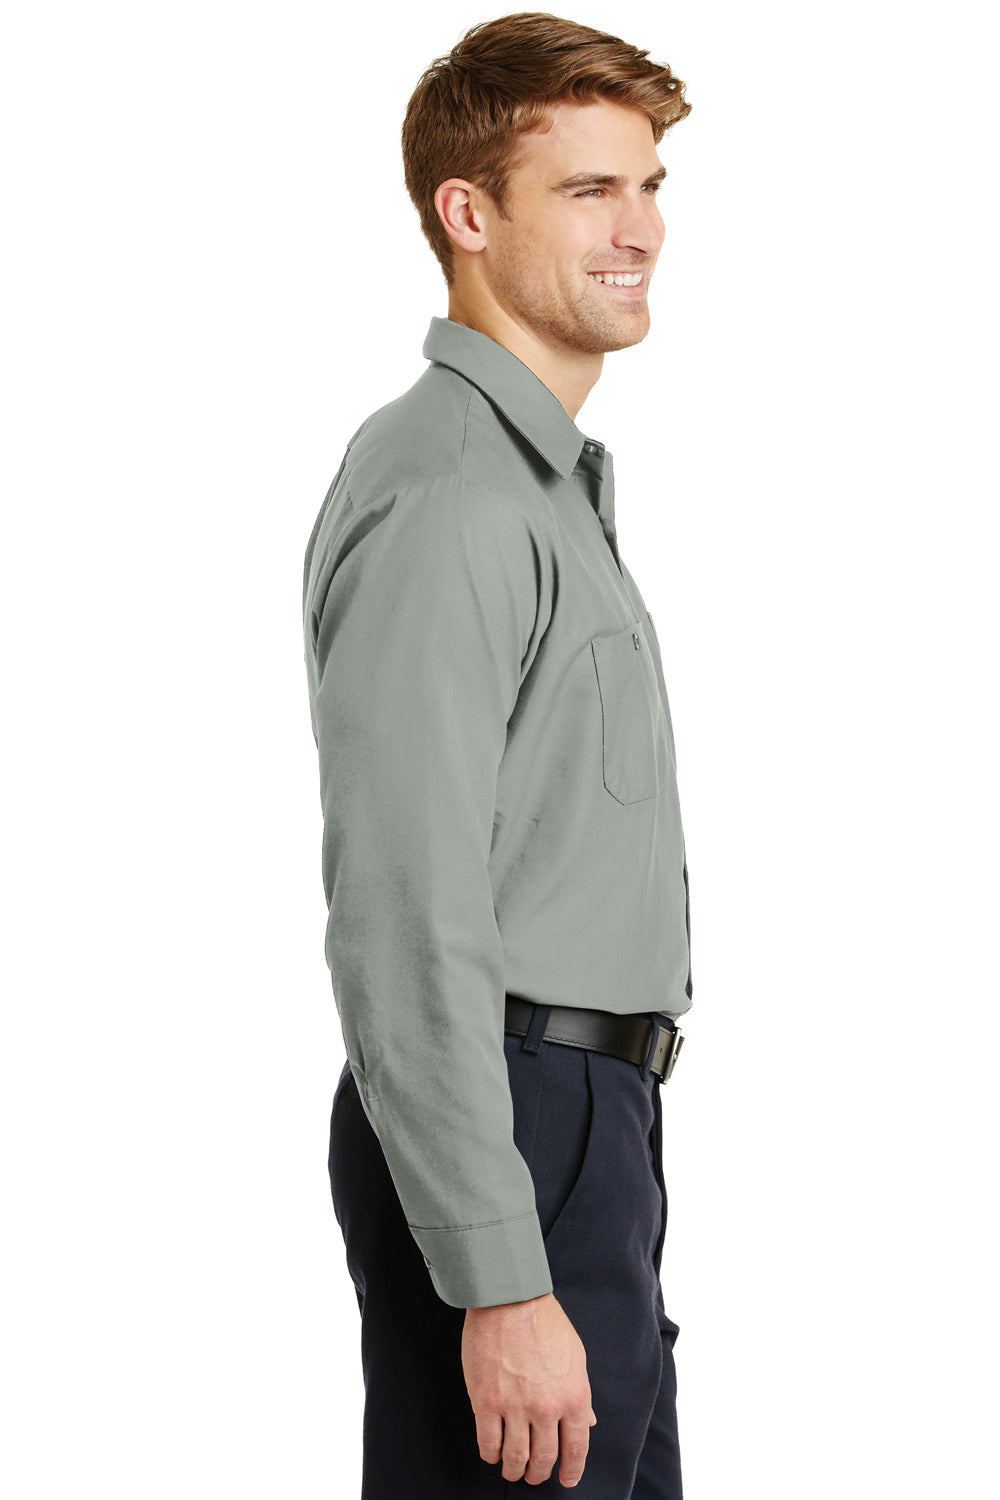 Red Kap SP14 Mens Industrial Moisture Wicking Long Sleeve Button Down Shirt w/ Double Pockets Light Grey Side